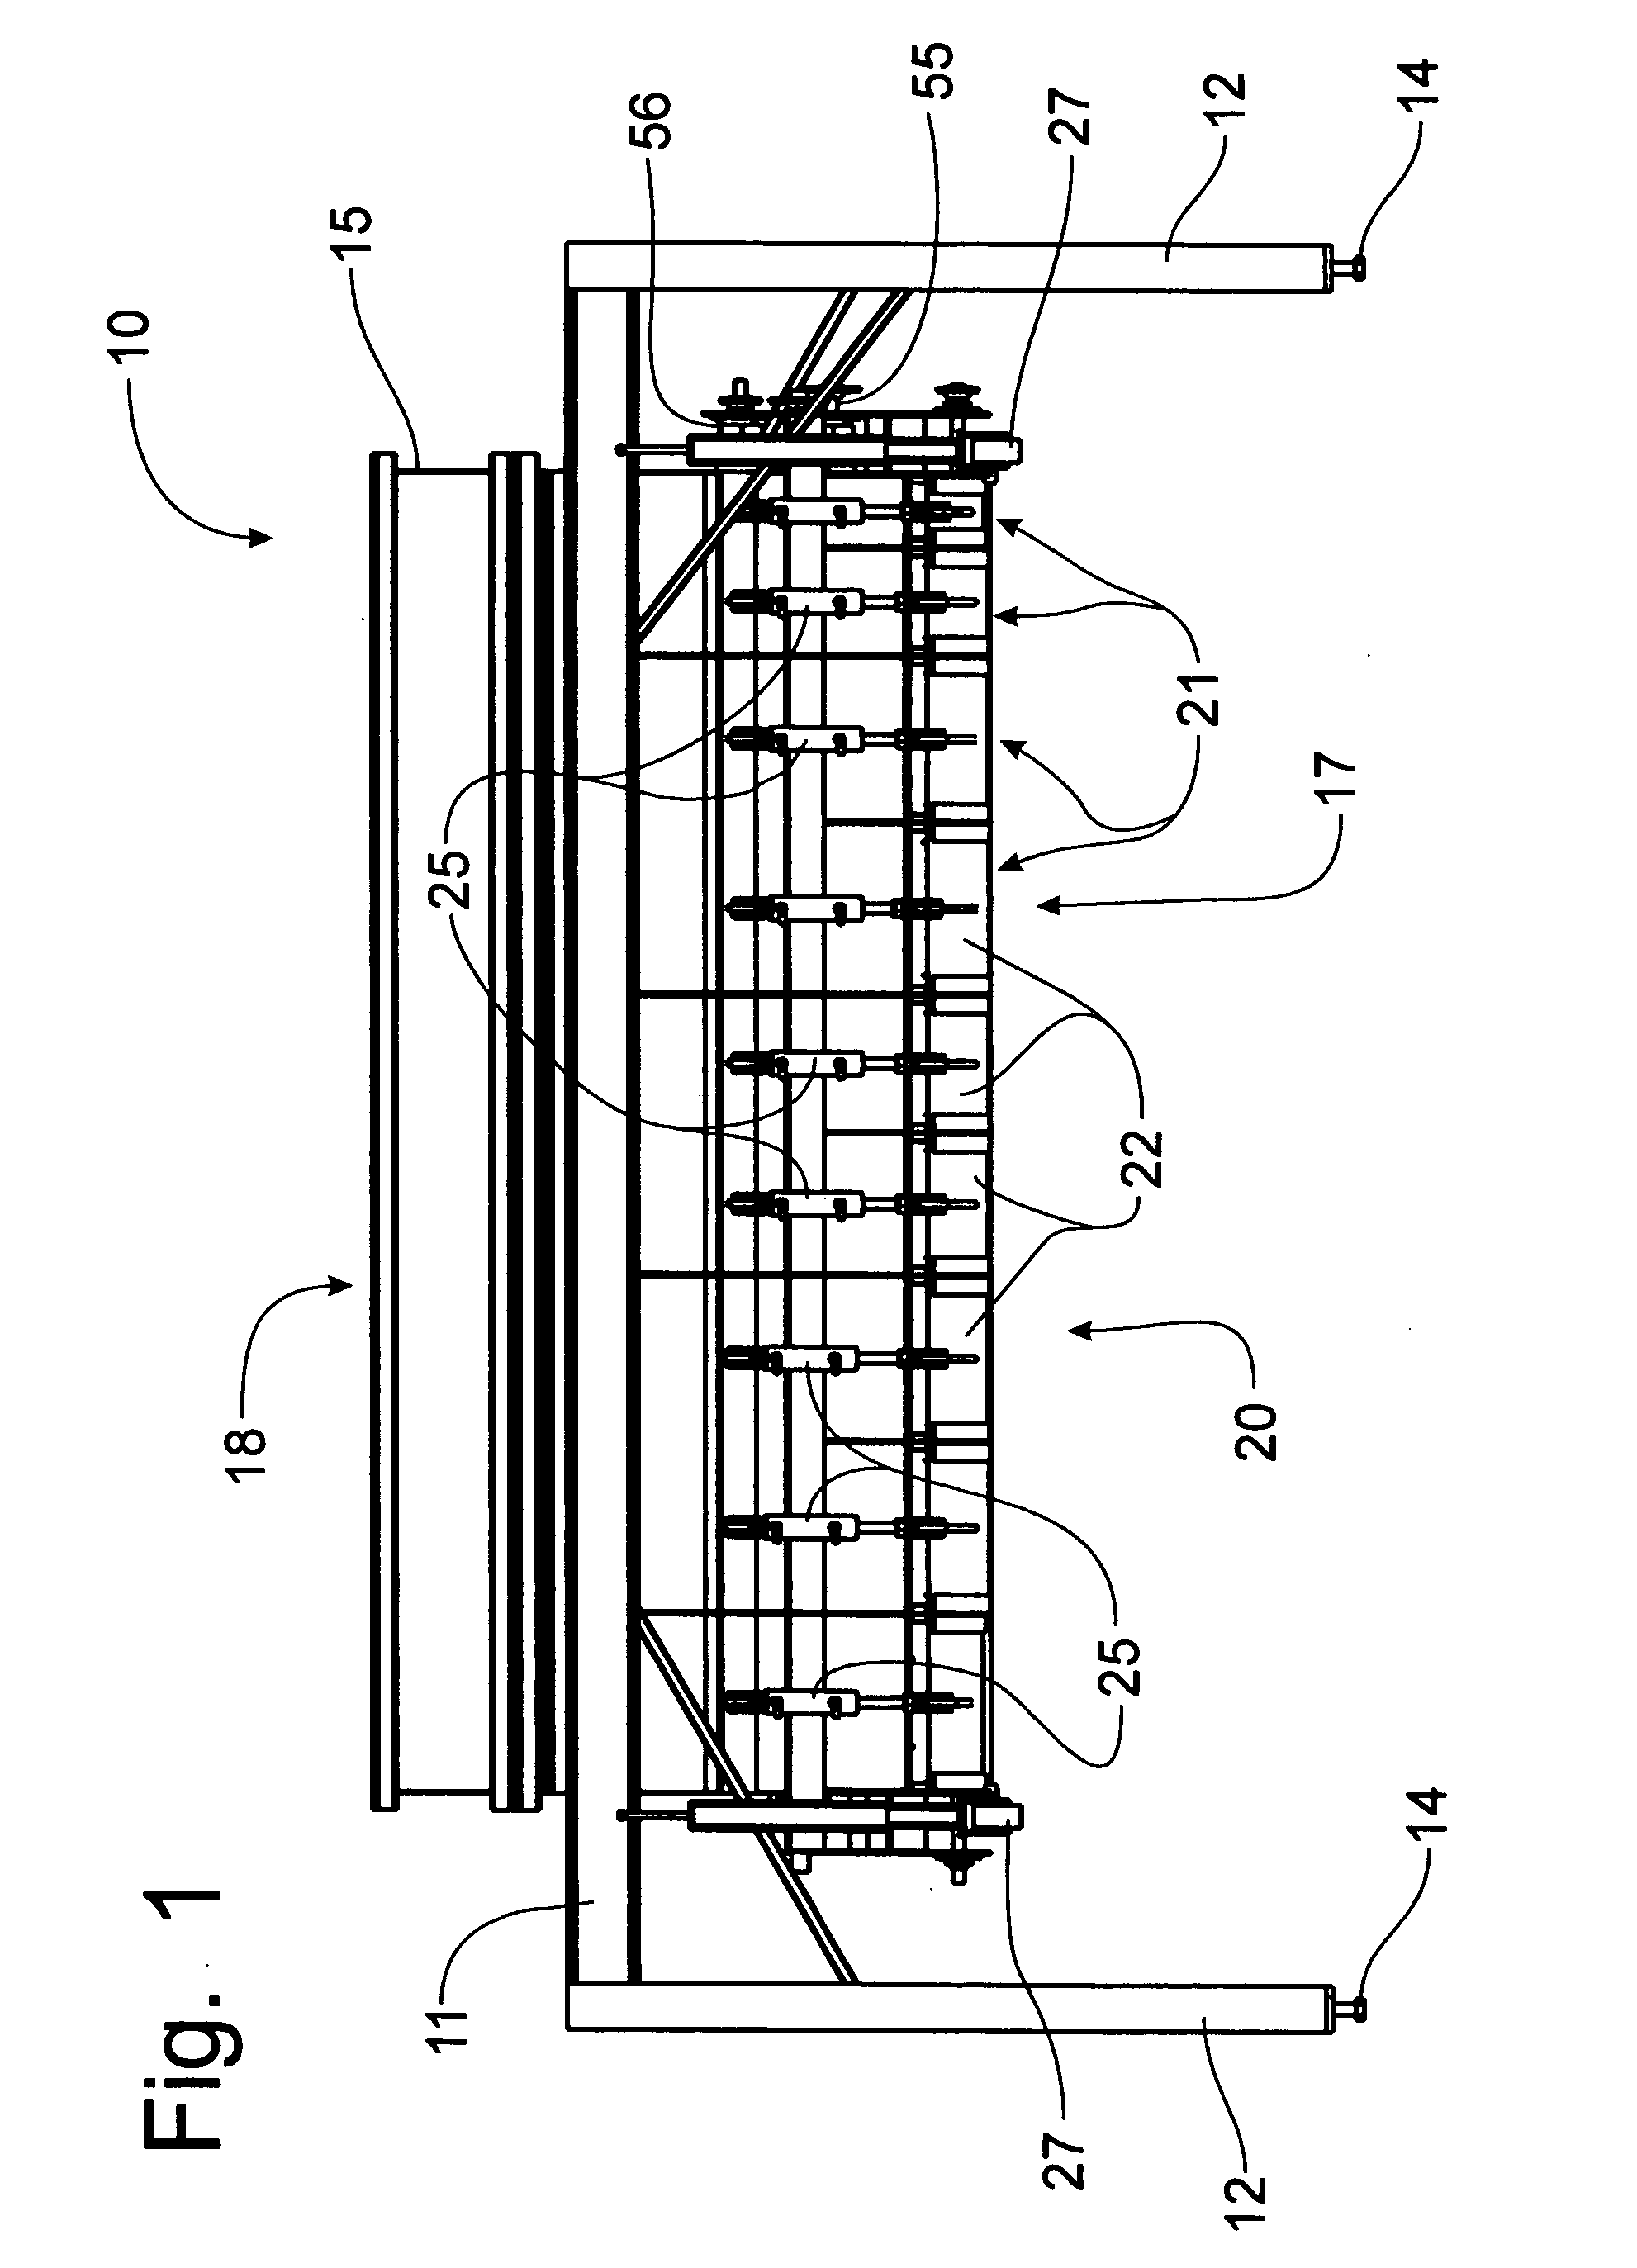 Segmented auger for a concrete dispensing apparatus